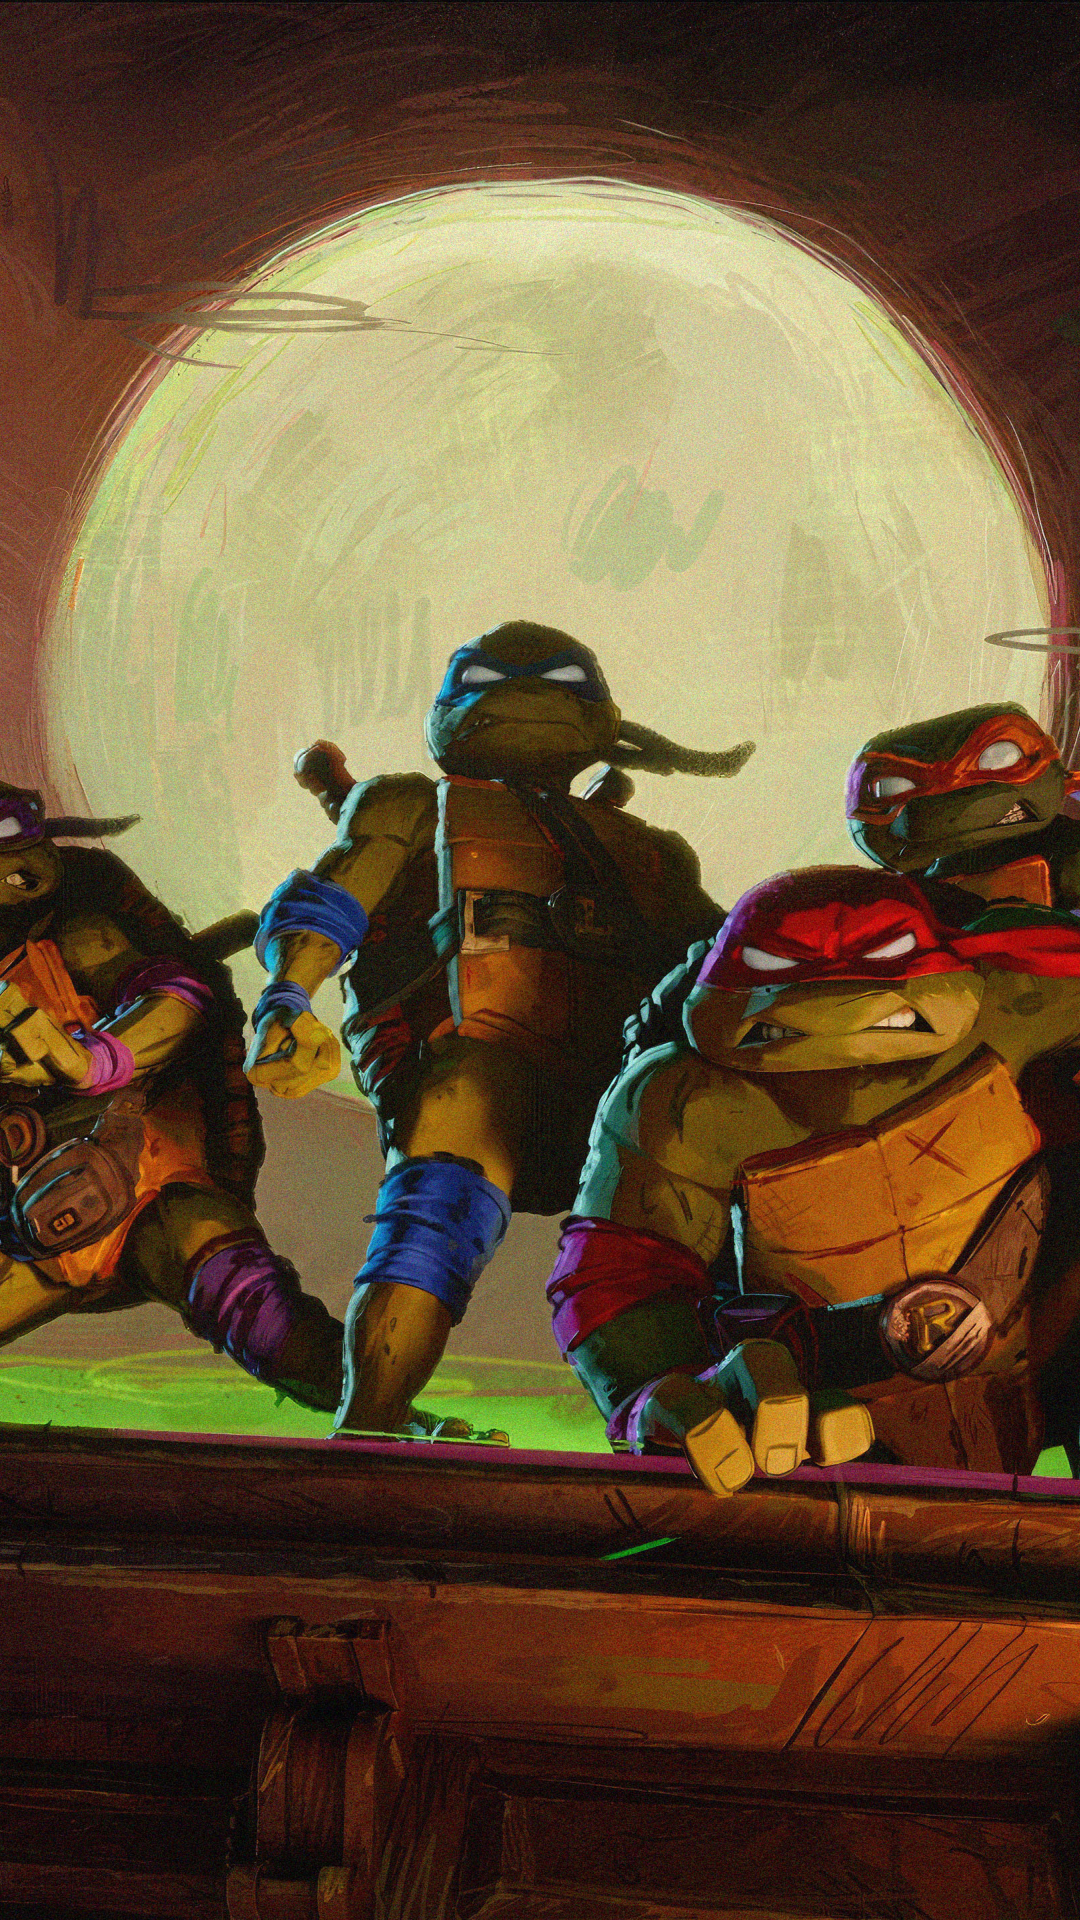 Teenage Mutant Ninja Turtles: Mutant Mayhem 4K Wallpaper iPhone HD